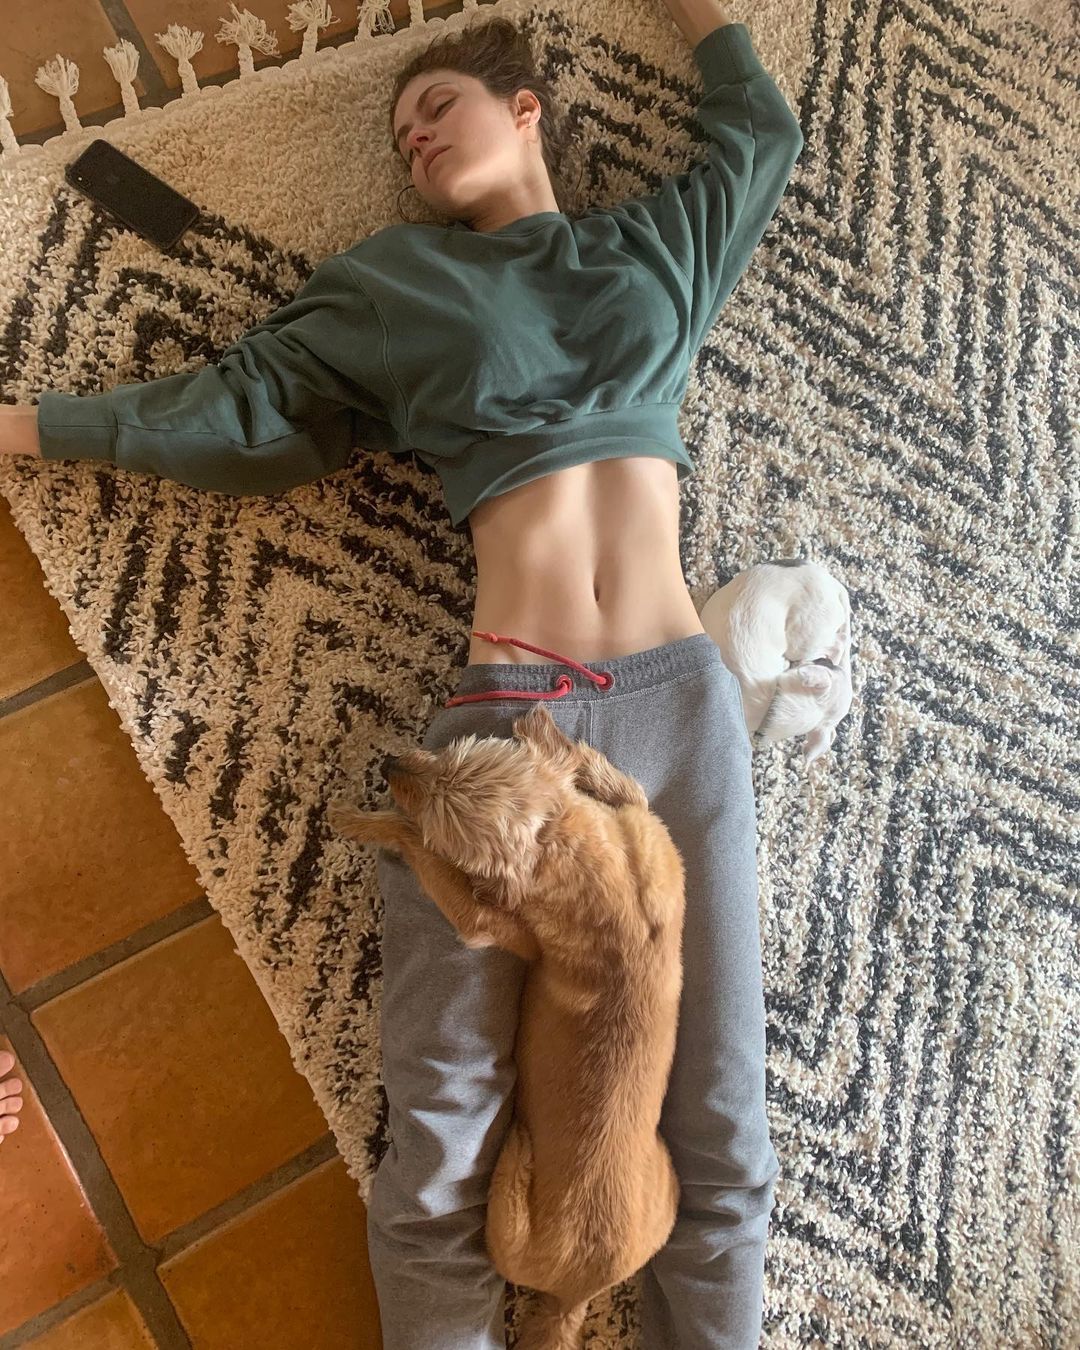 Alexandra Daddario lying on the floor